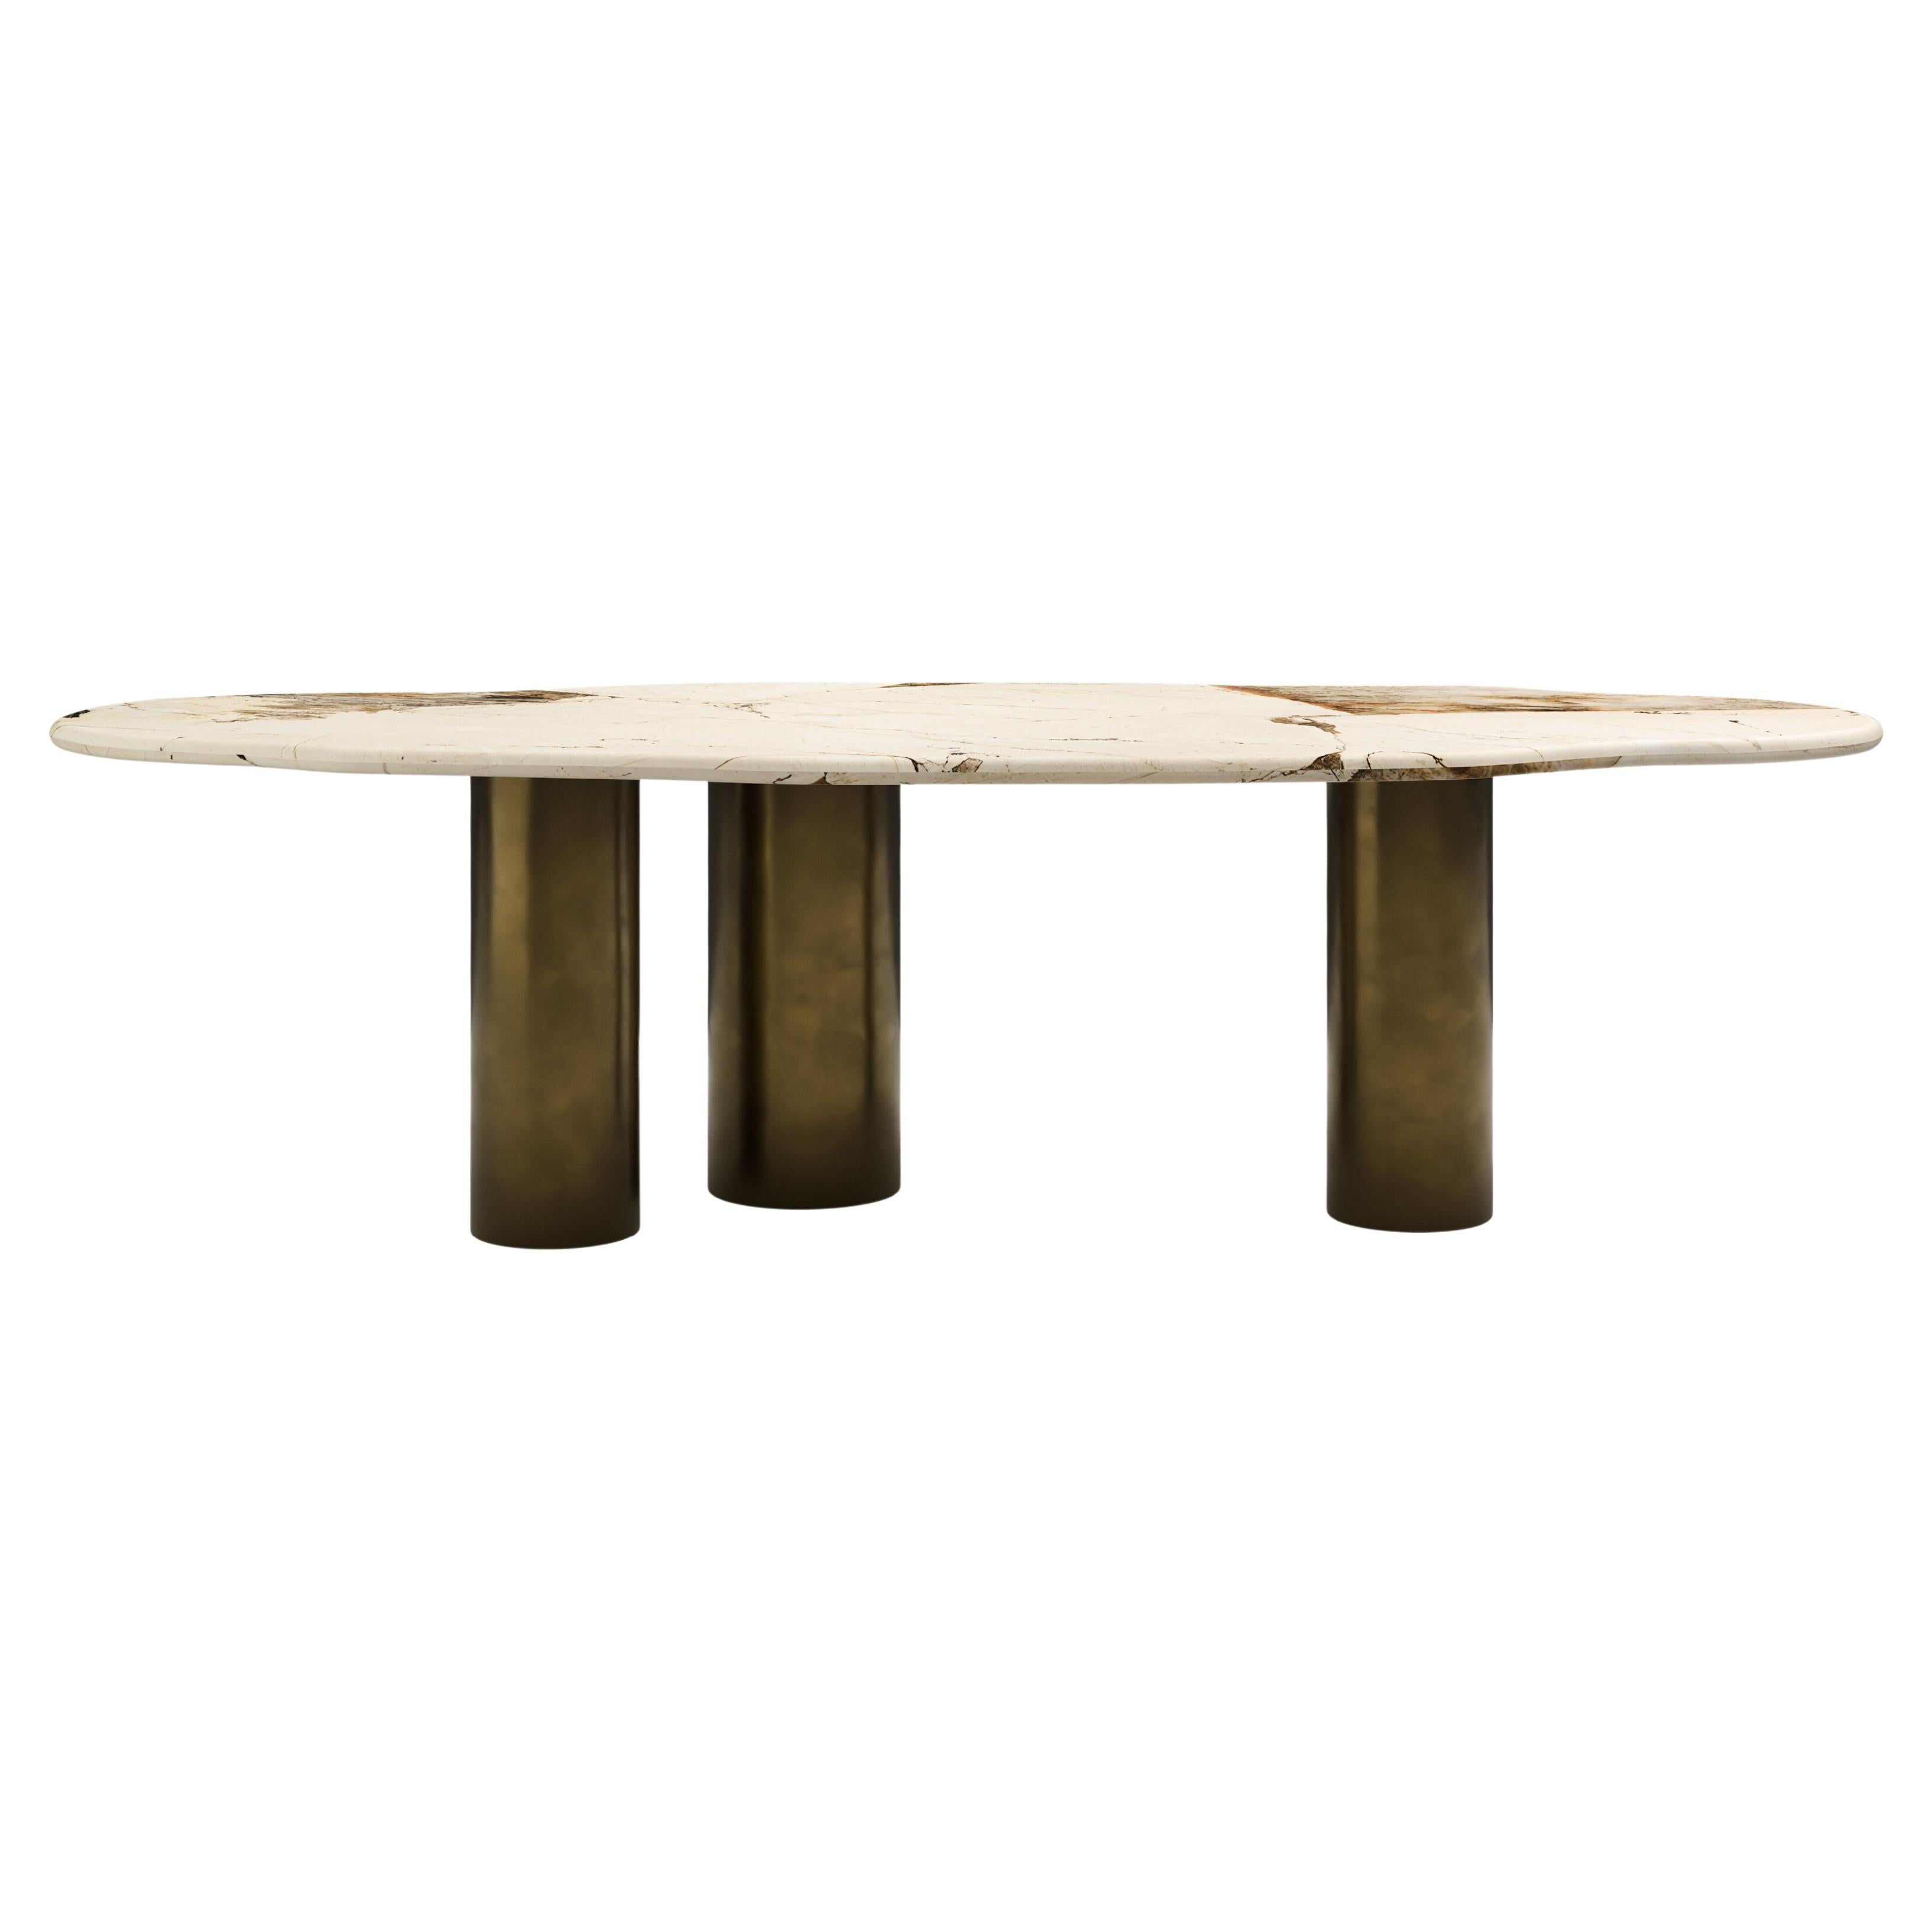 FORM(LA) Lago Freeform Dining Table 96”L x 42”W x 30”H Quartzite & Bronze For Sale